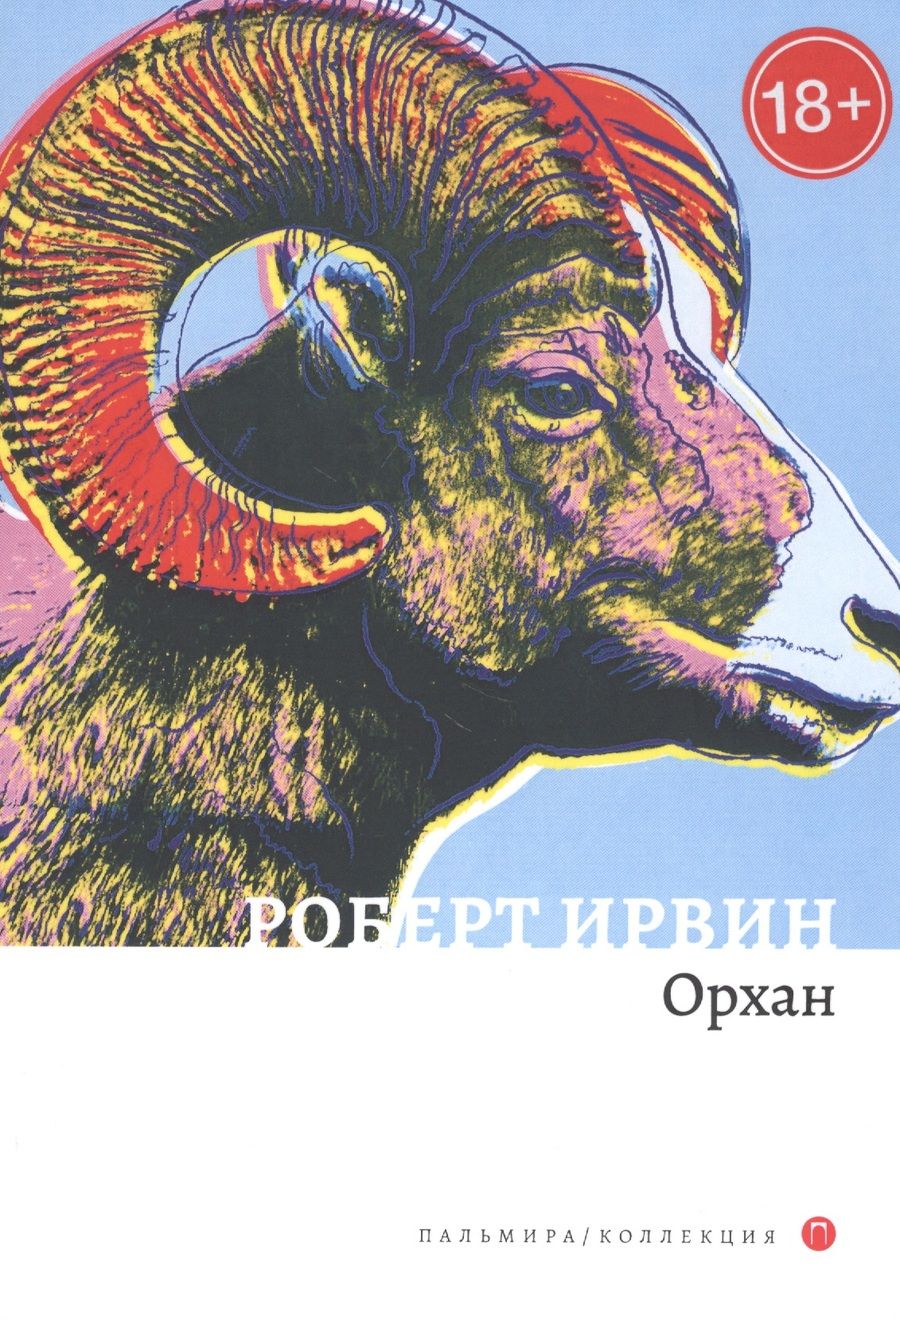 Обложка книги "Ирвин: Орхан: роман "